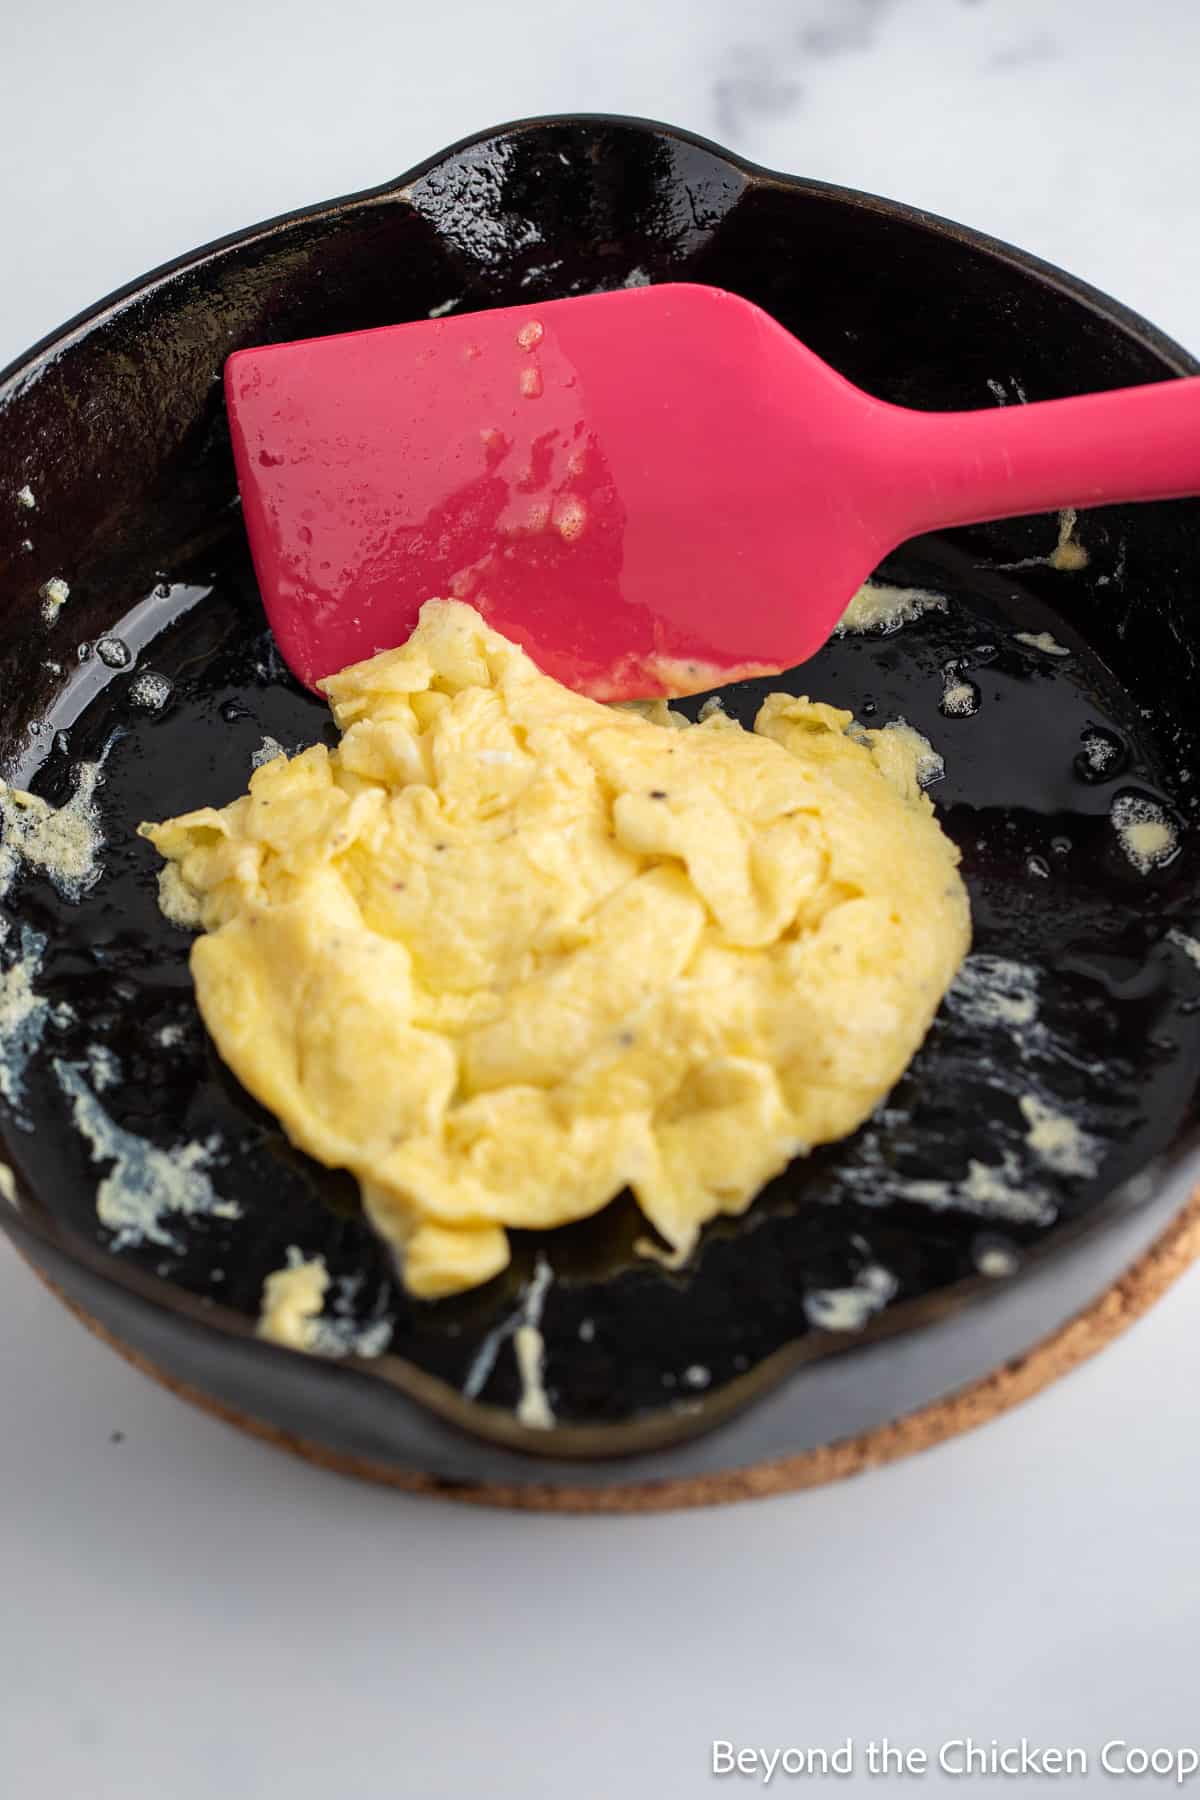 Make a scrambled egg patty. 